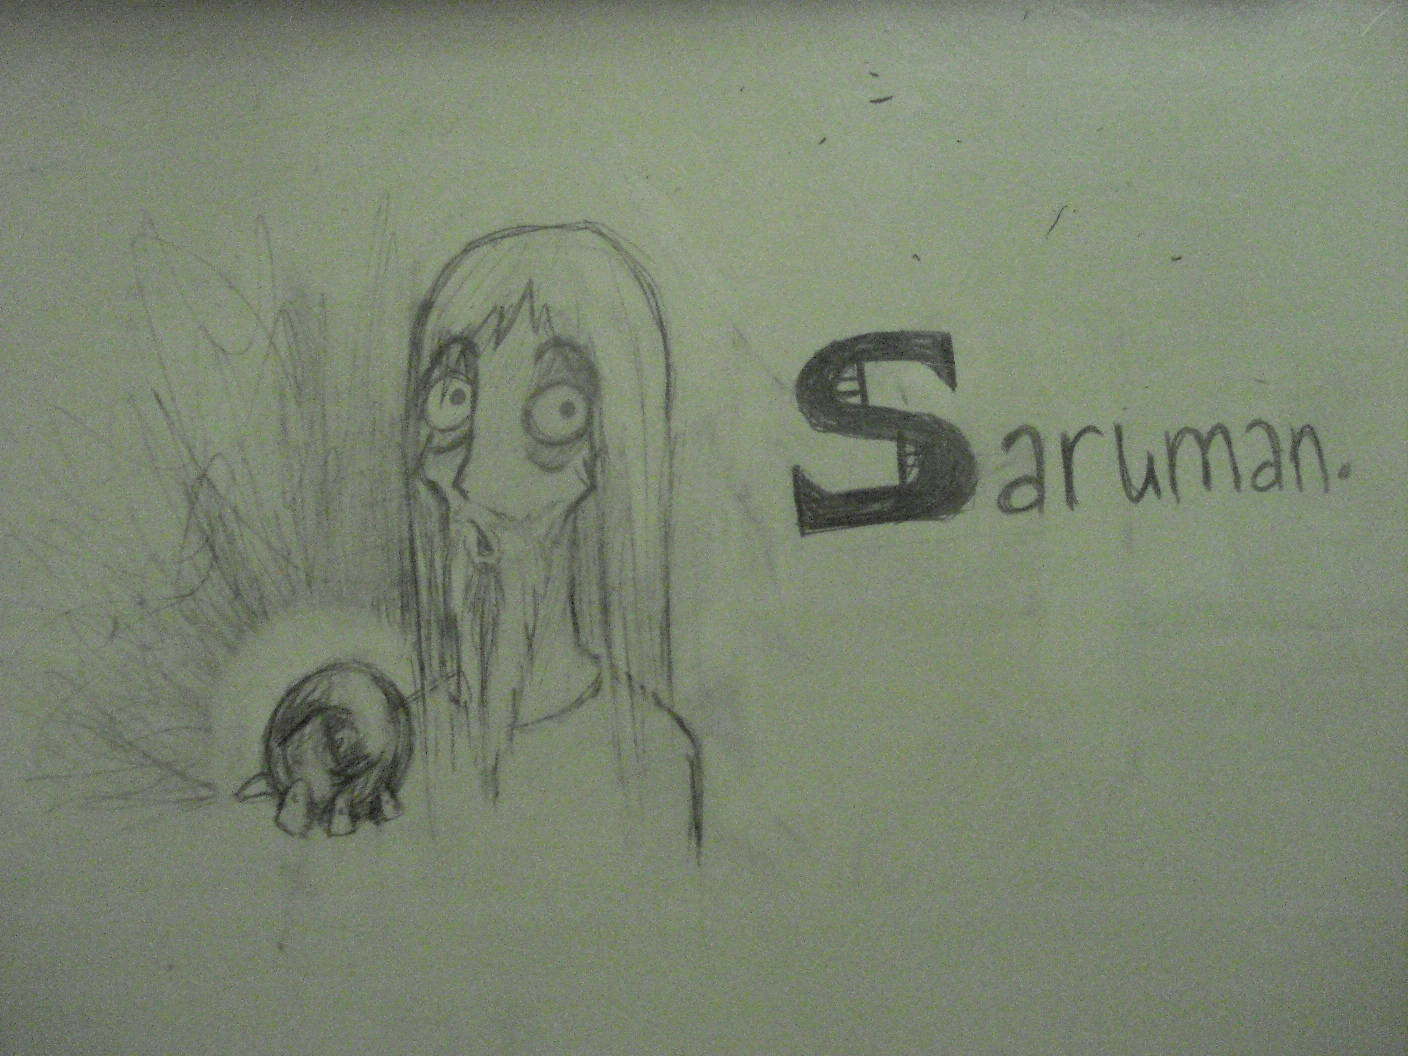 Desk Graffiti: Saruman! by Kittyku1189